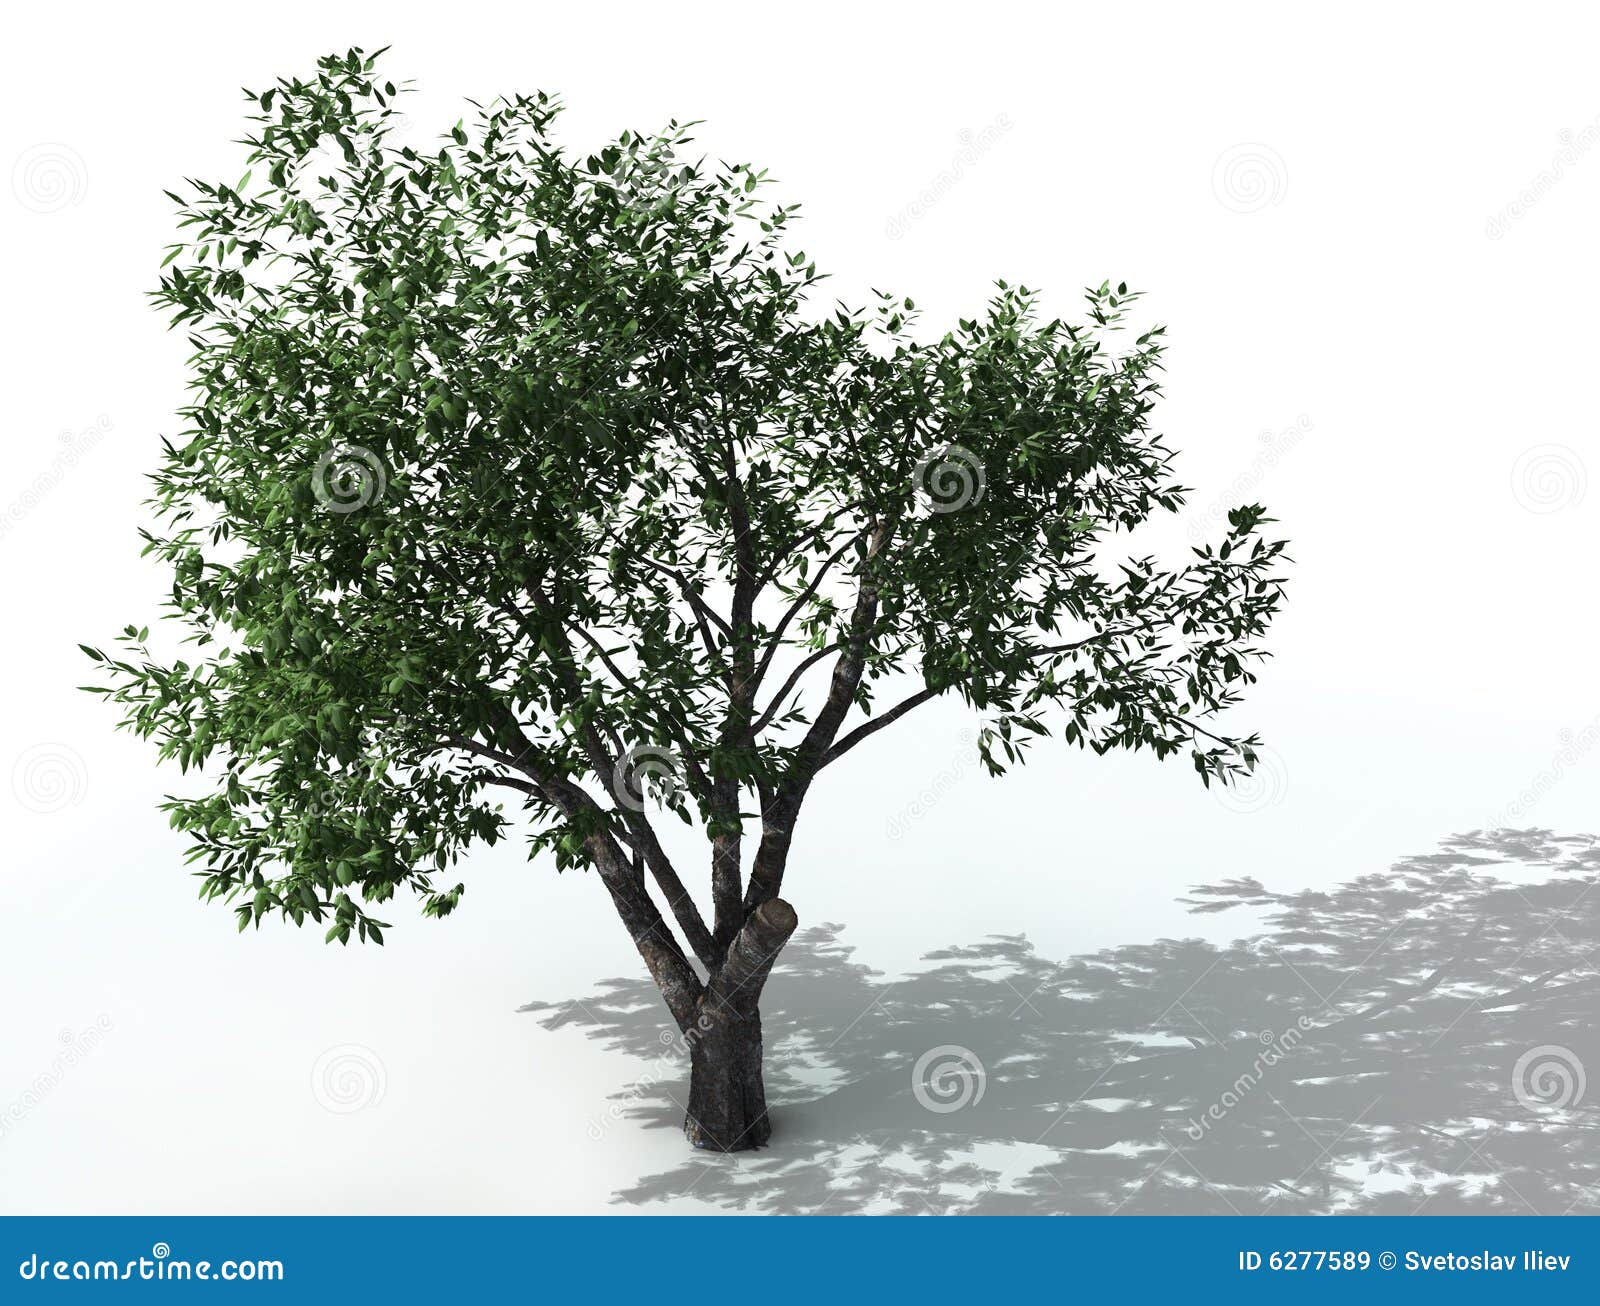 free clipart elm tree - photo #49